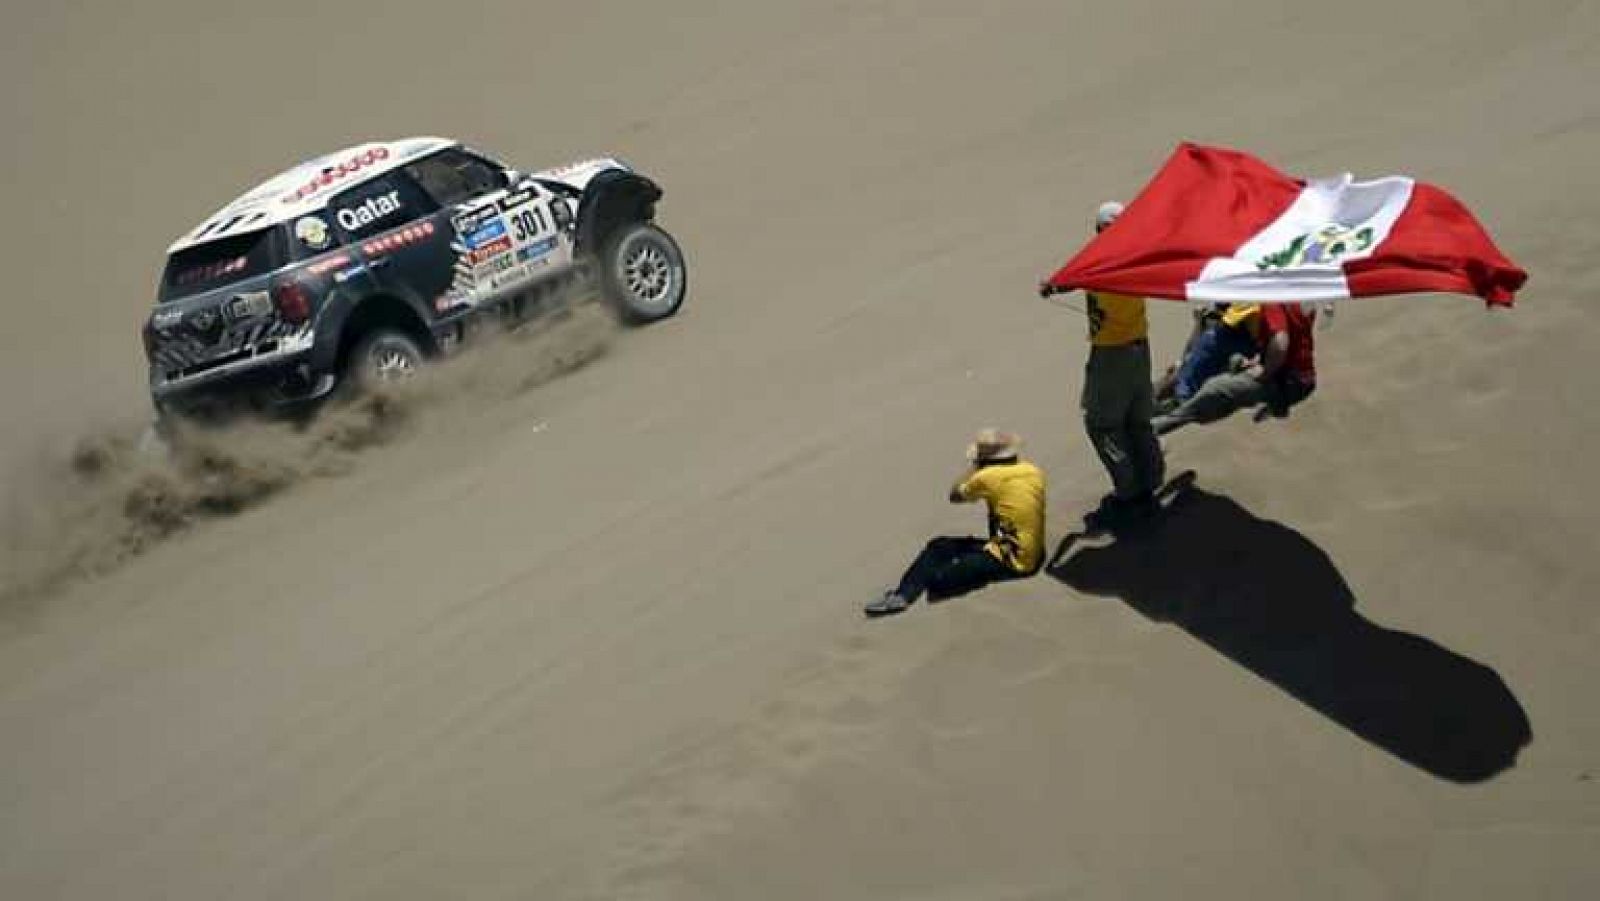 Rally Dakar 2014 - Etapa 9 (Calama - Iquique) - 14/01/14